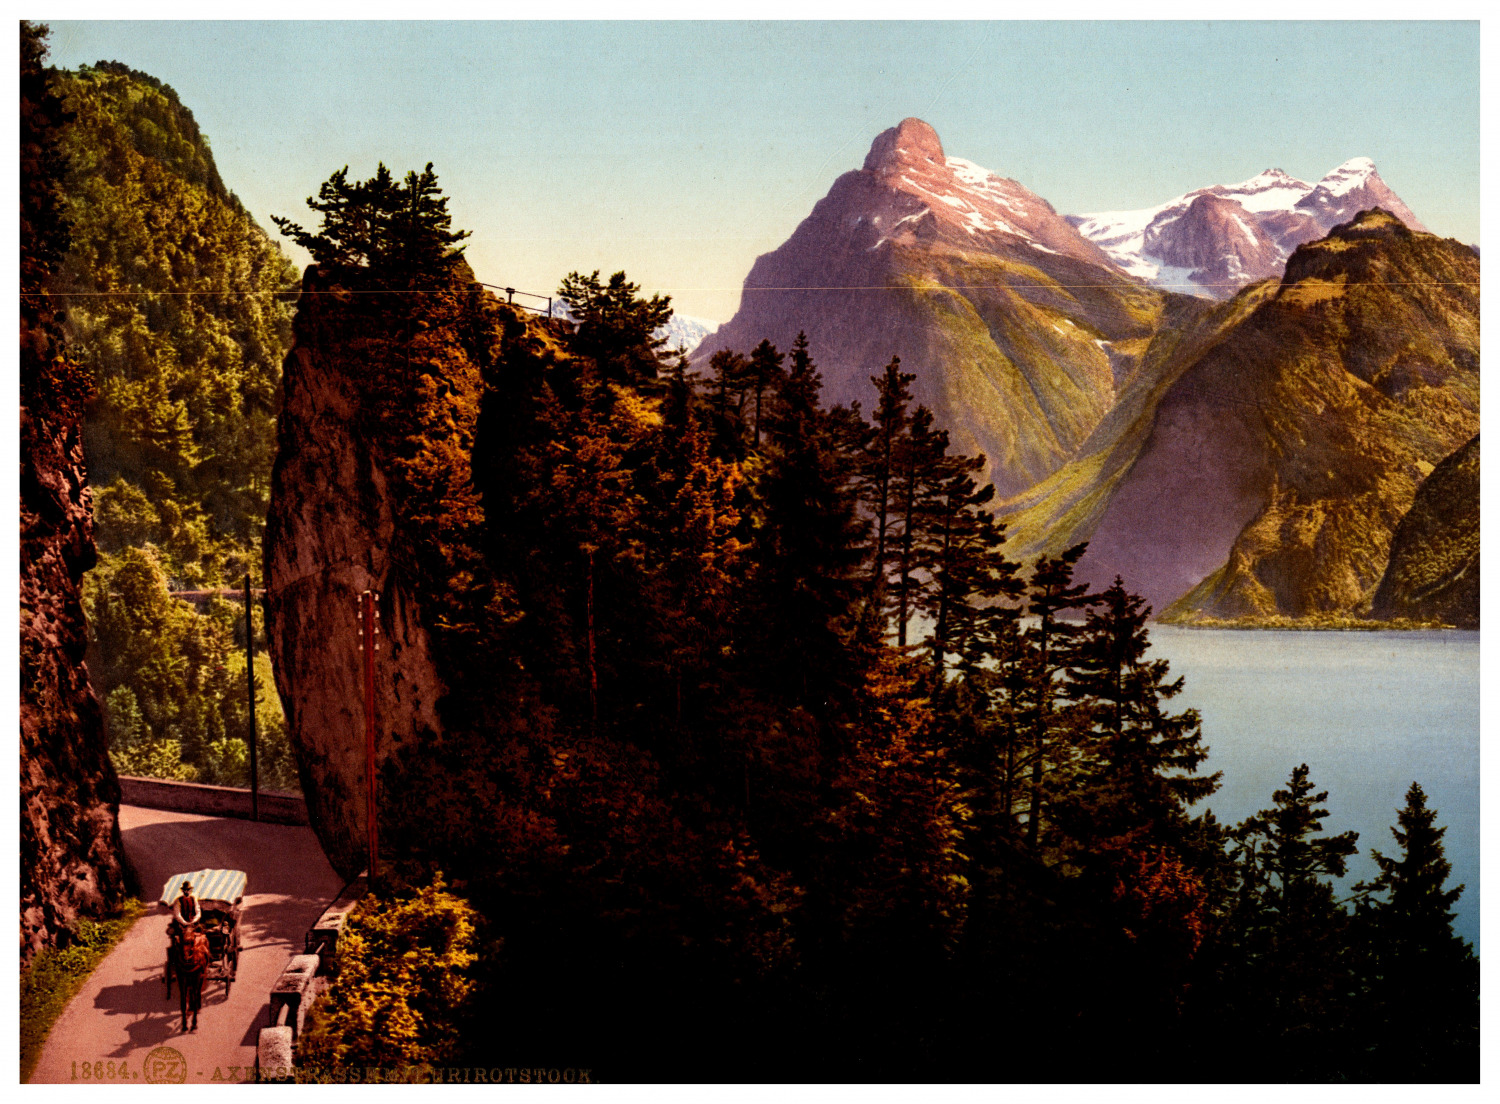 Suisse, Lake Lucerne, Axenstrasse and Urirotstock vintage albums print,